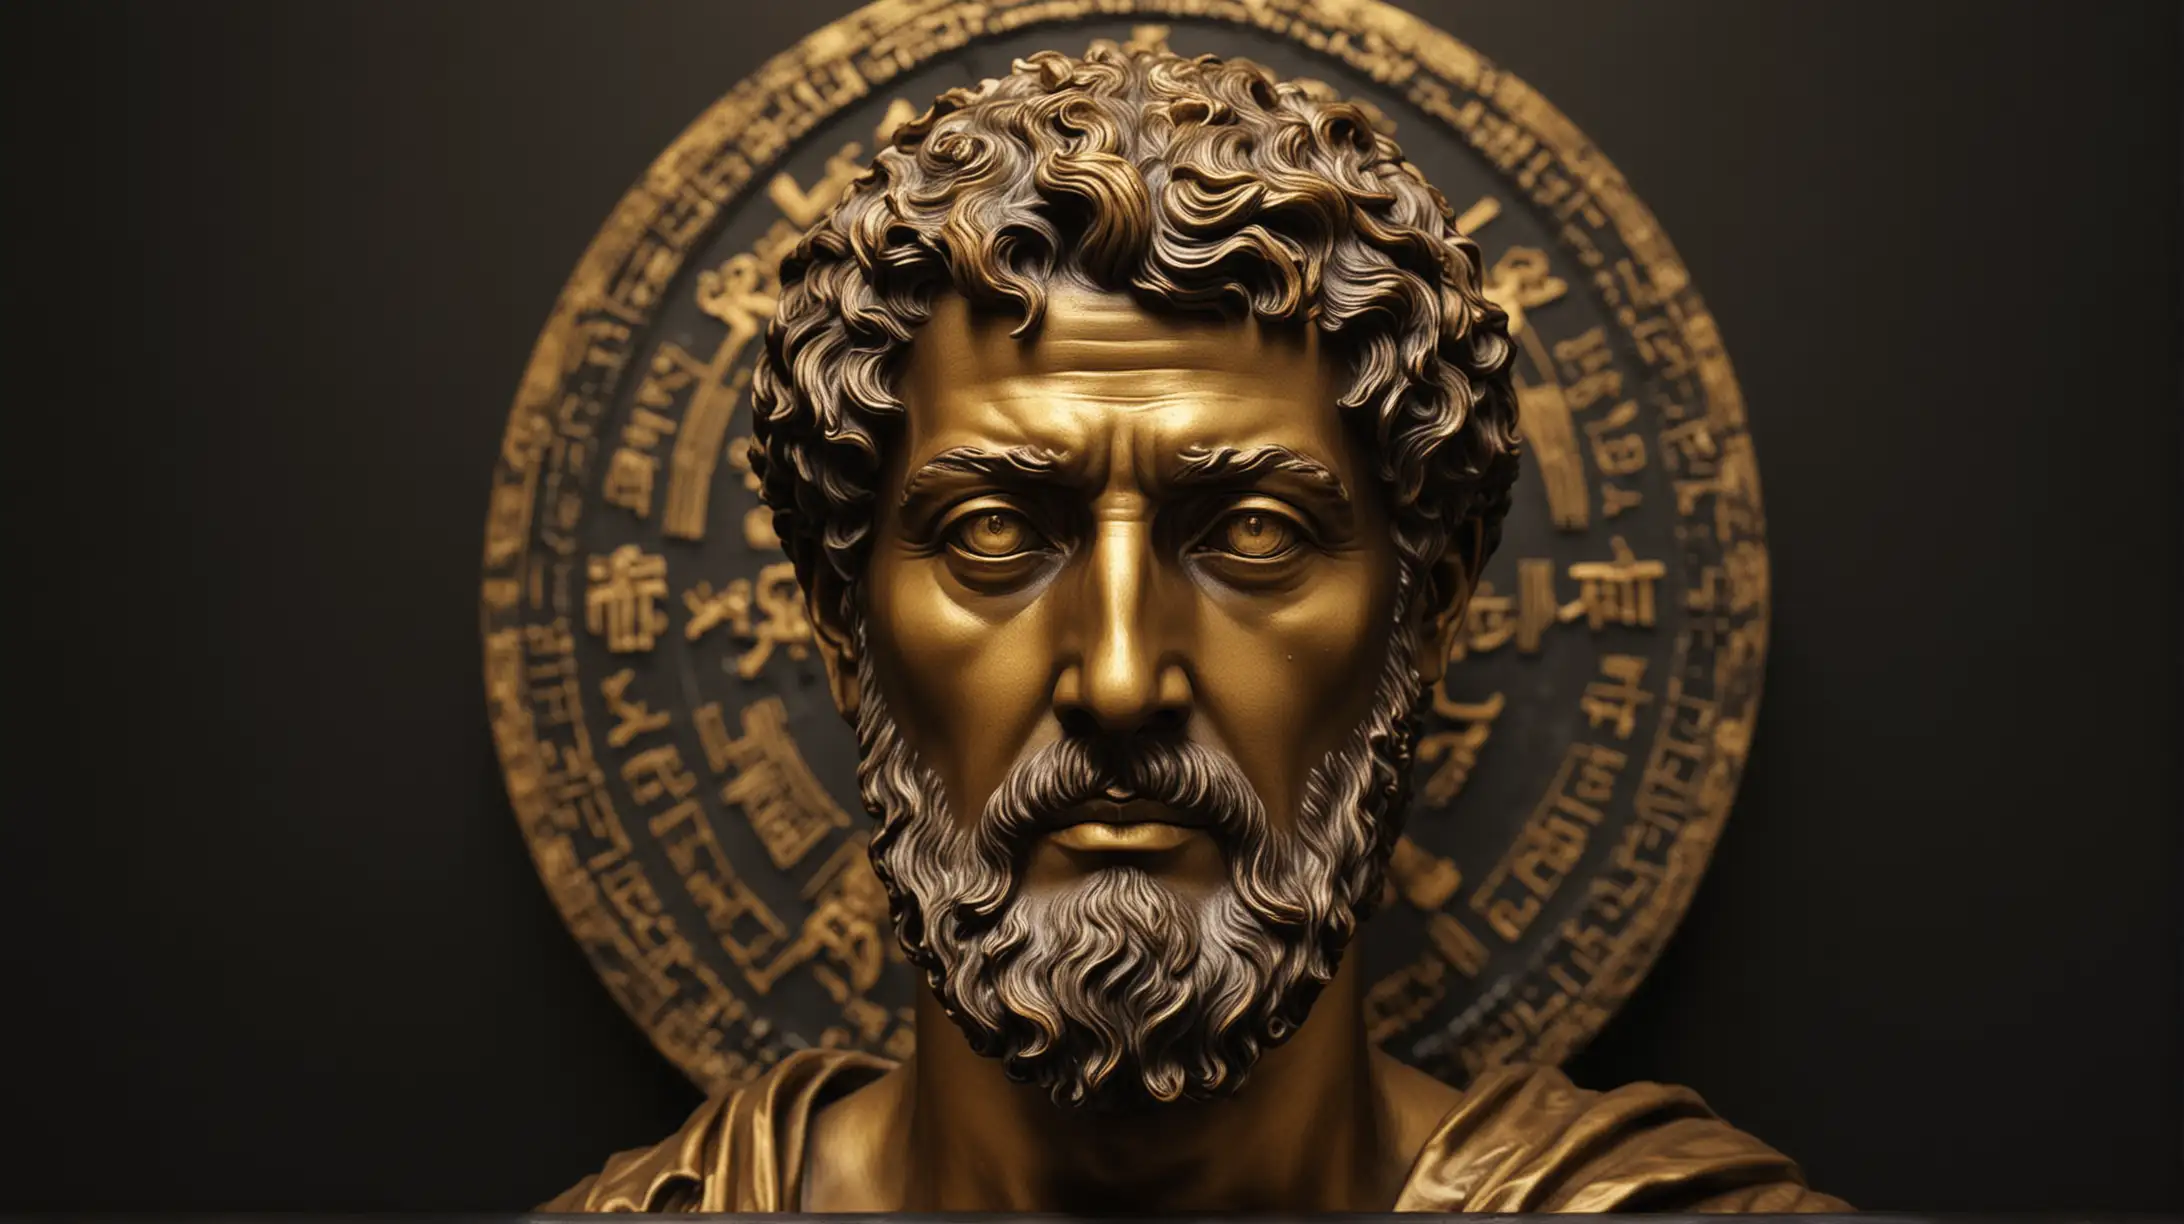 Stoic Philosopher Portrait on Elegant Gold and Black Background